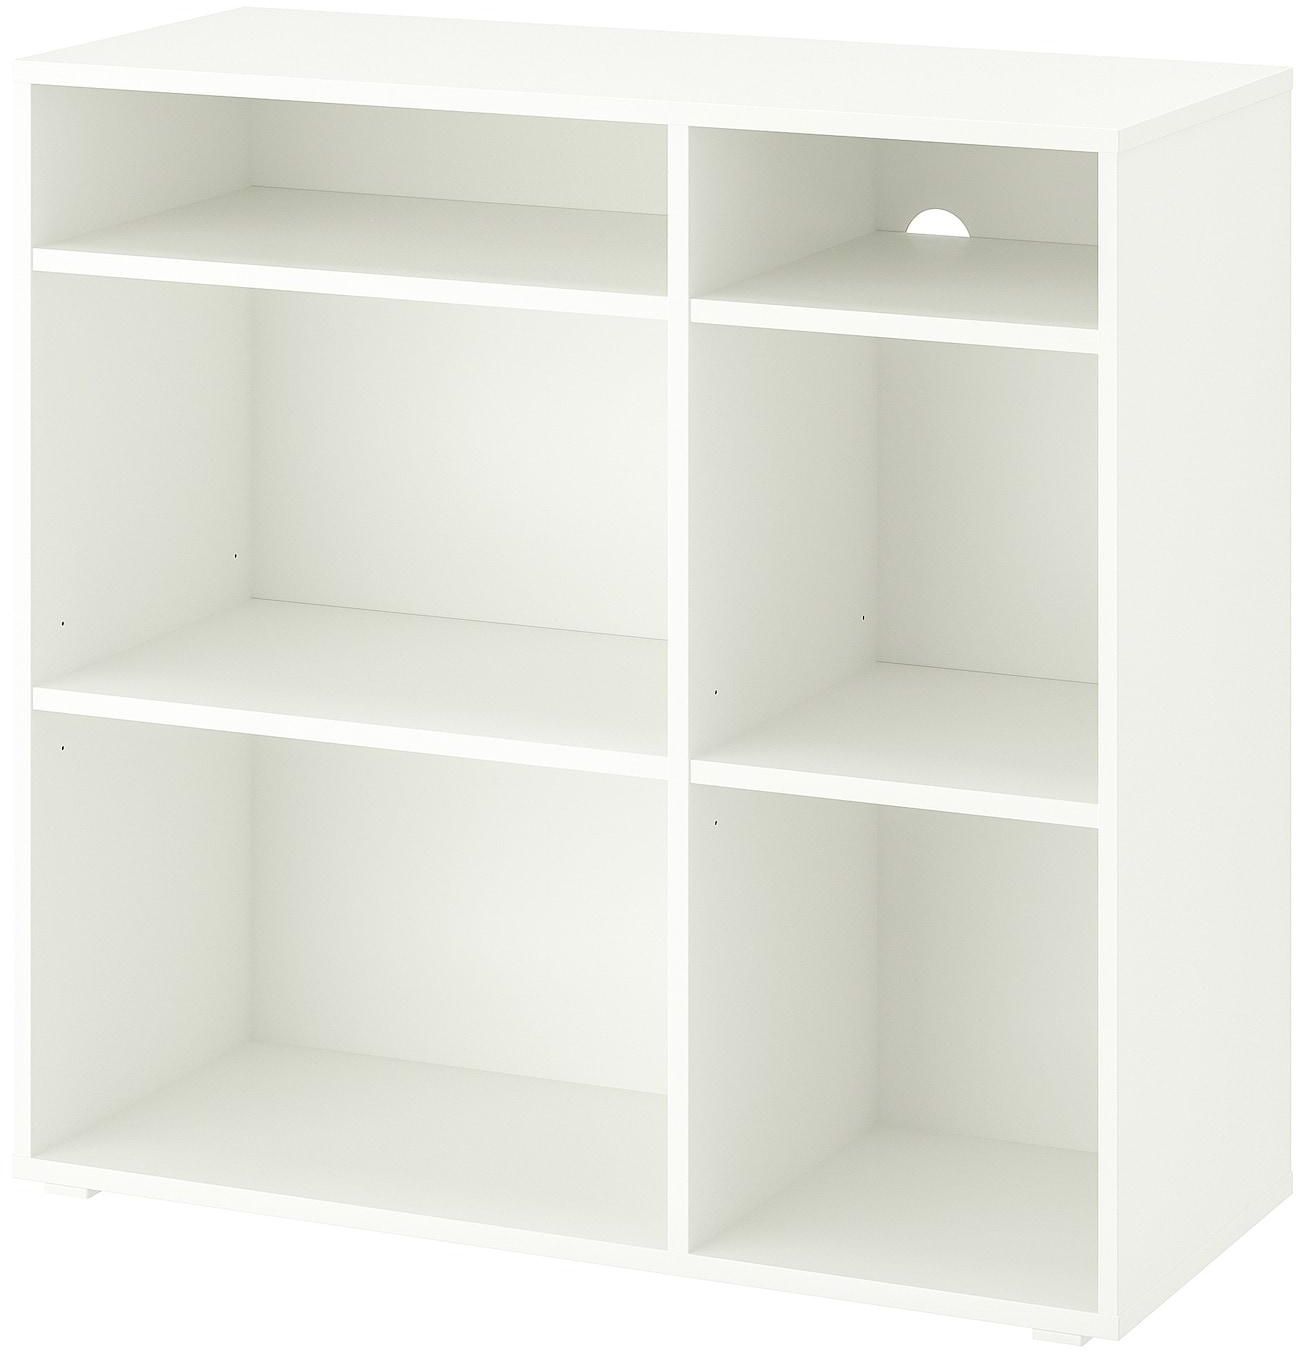 VIHALS Shelving unit with 4 shelves - white 95x37x90 cm